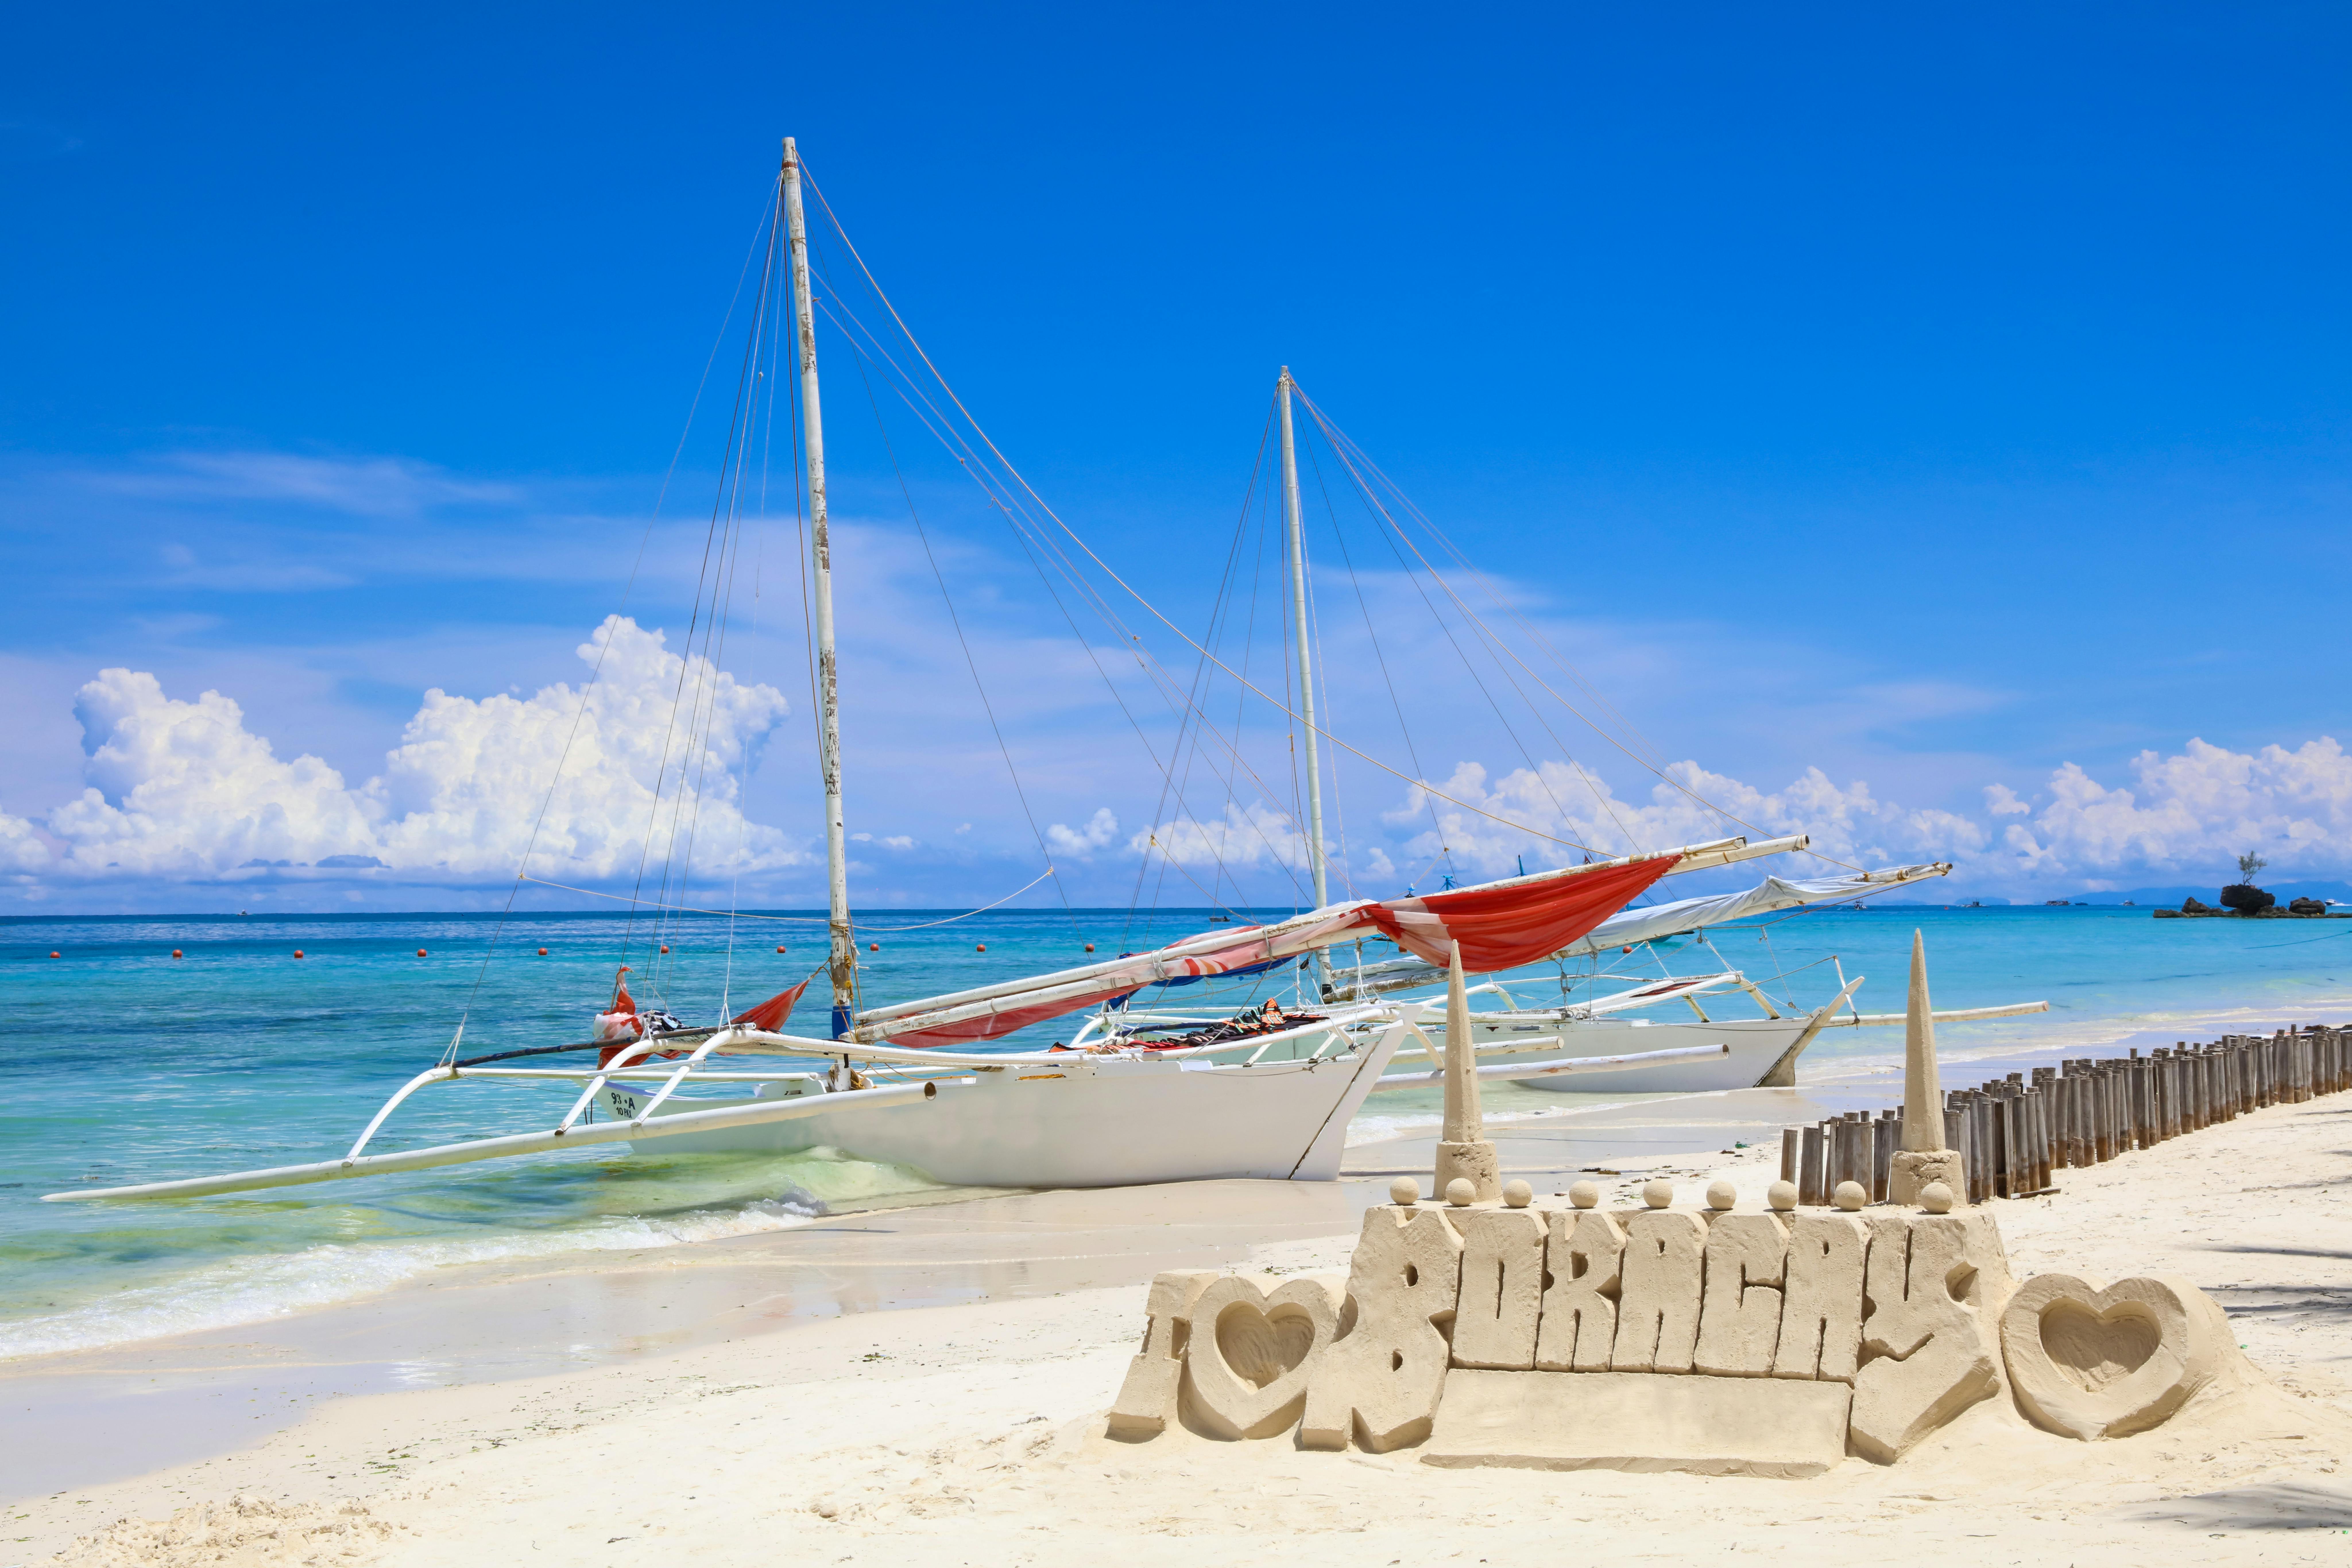 Sand artwork at White Beach, Boracay Island